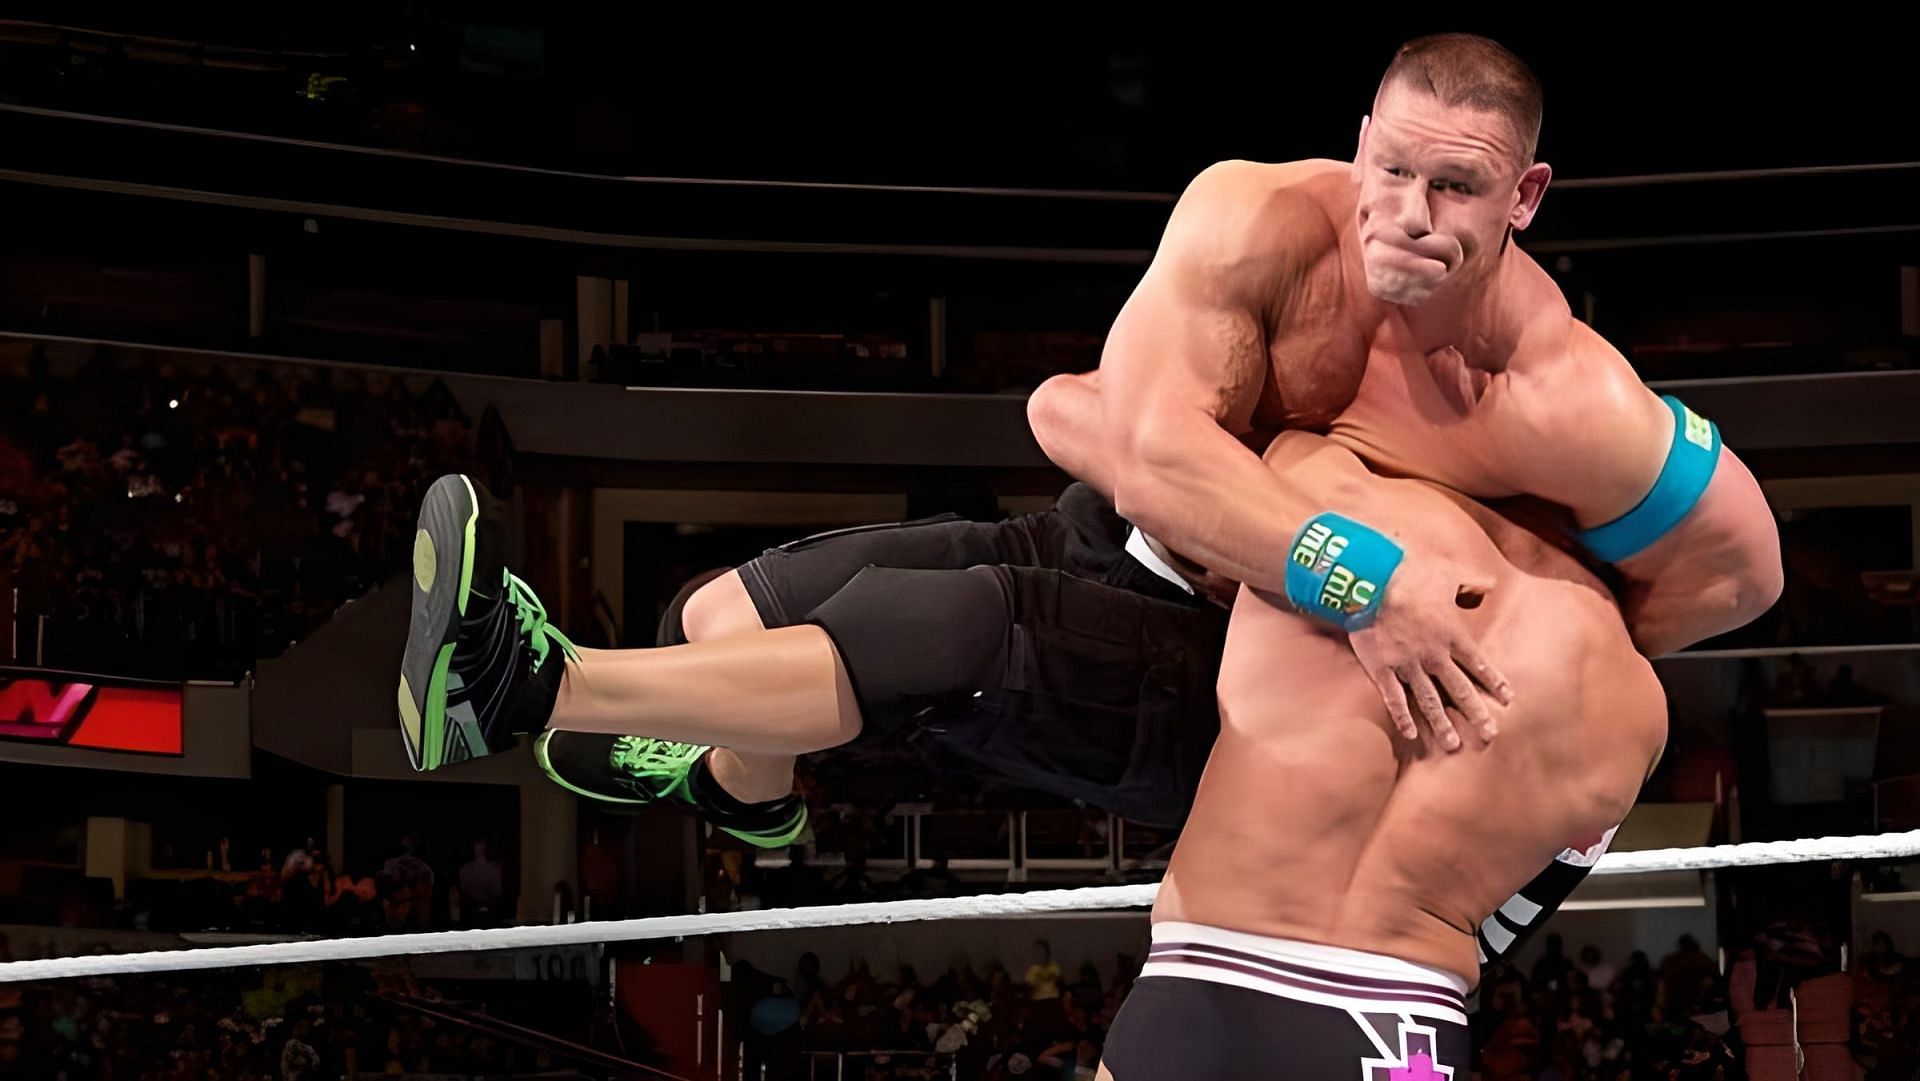 Cena executing a Tornado DDT